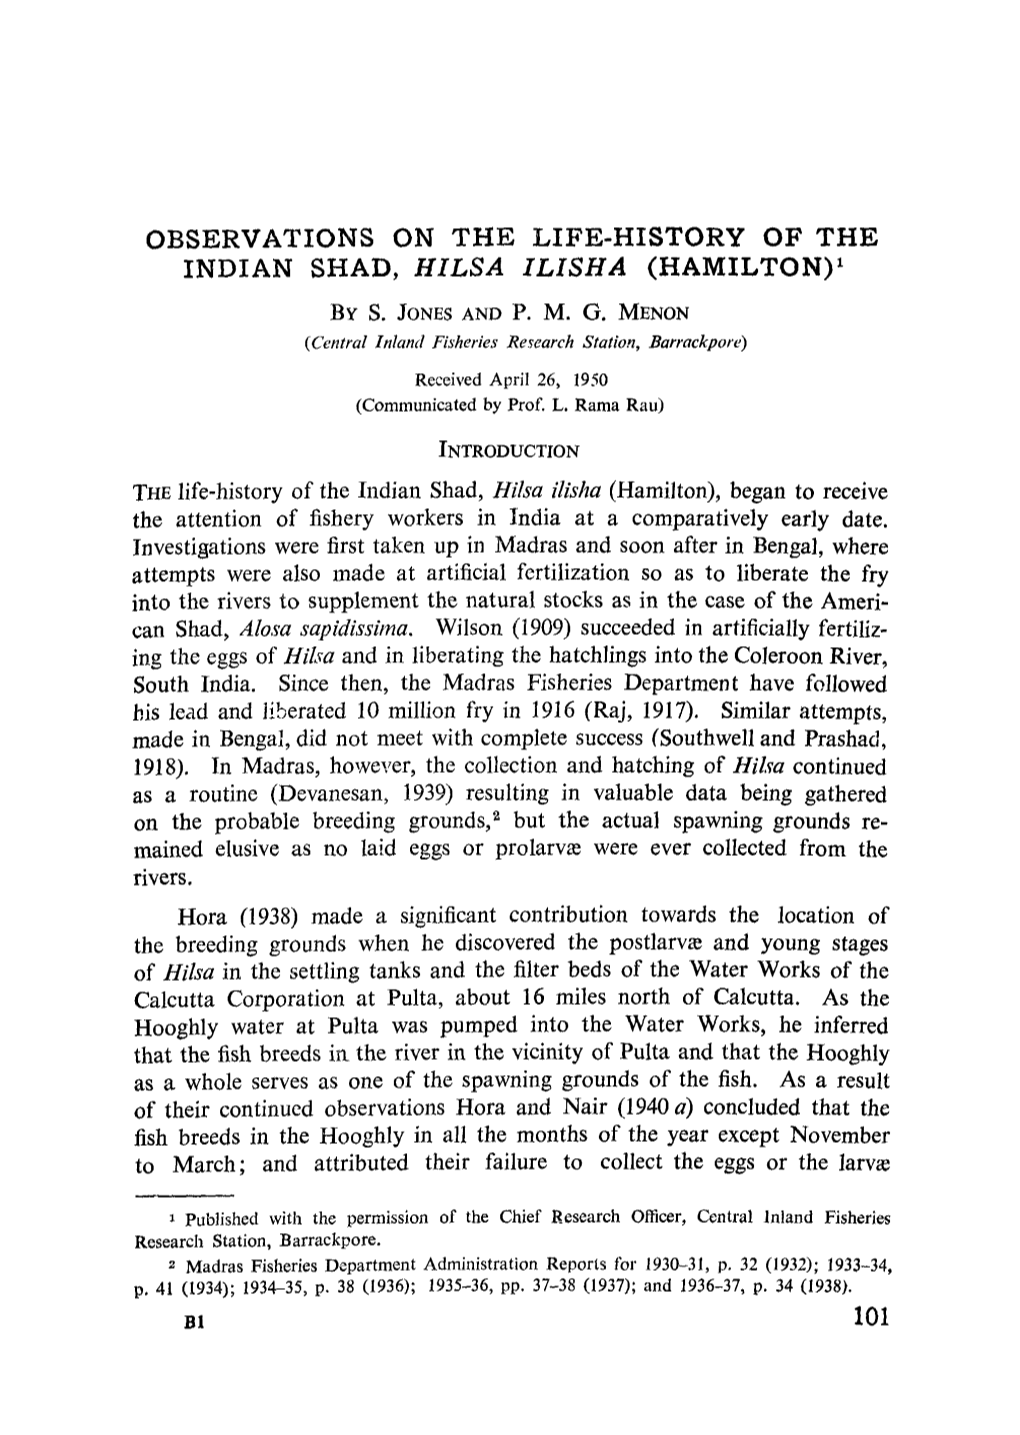 Observations on the Life-History of the Indian Shad, Hilsa Ilisha (Hamilton) I by S